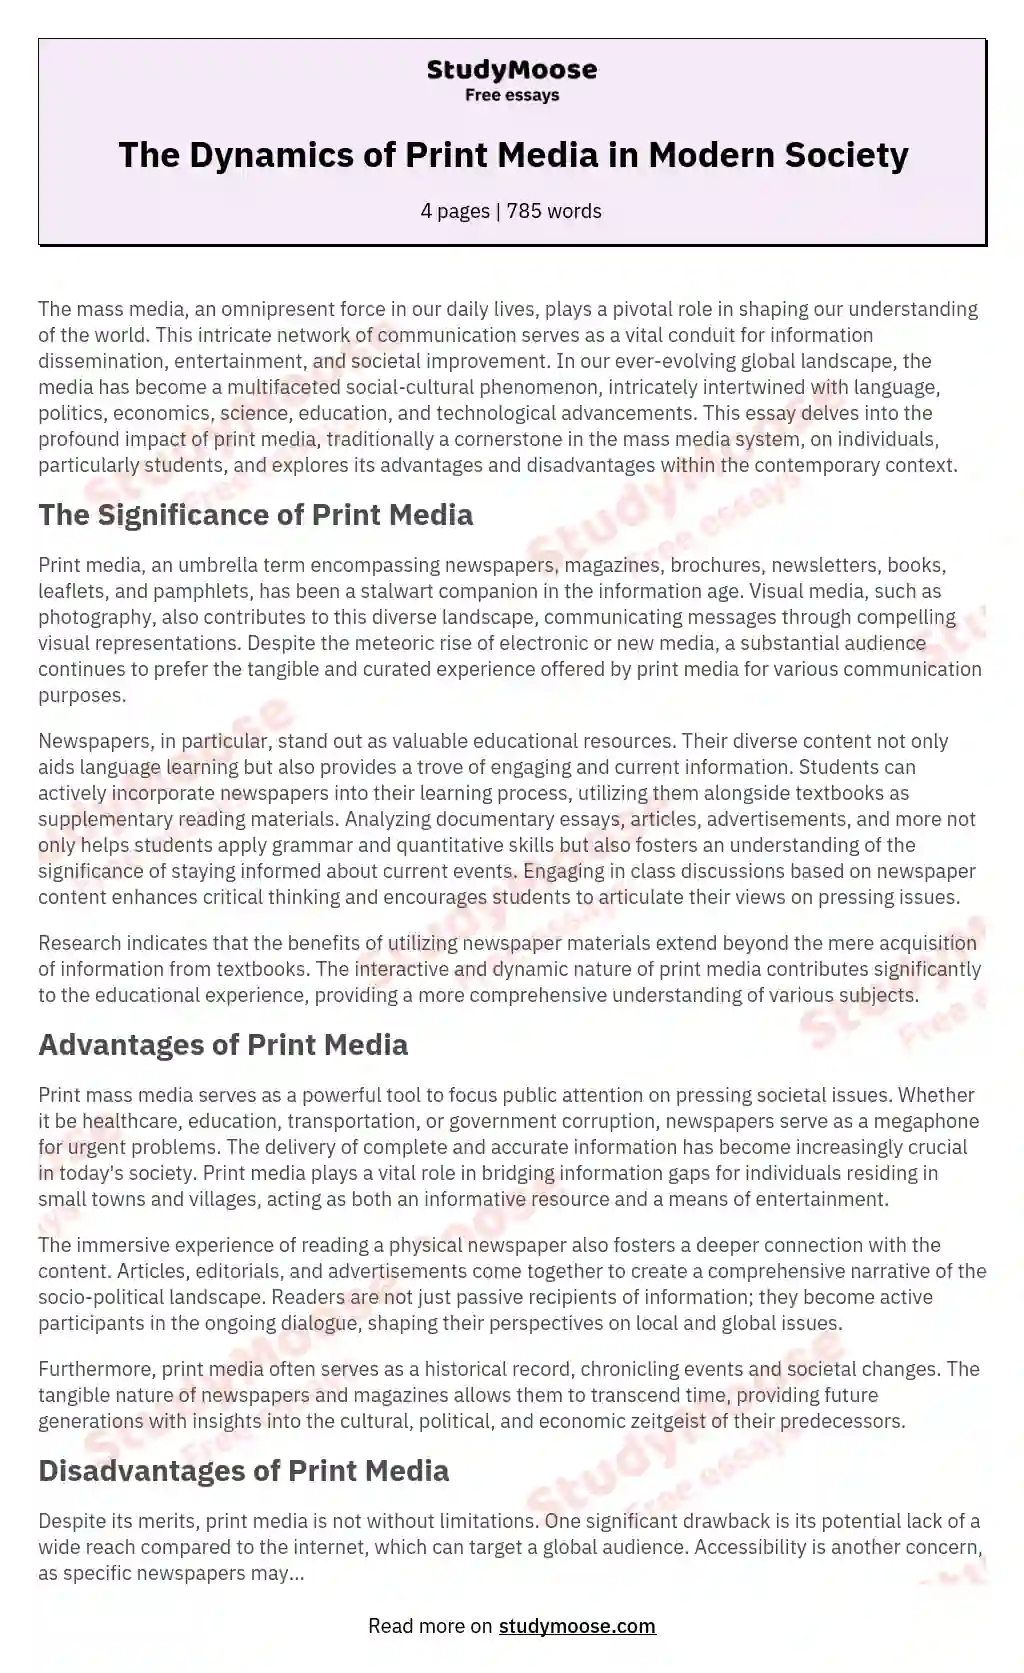 The Dynamics of Print Media in Modern Society essay